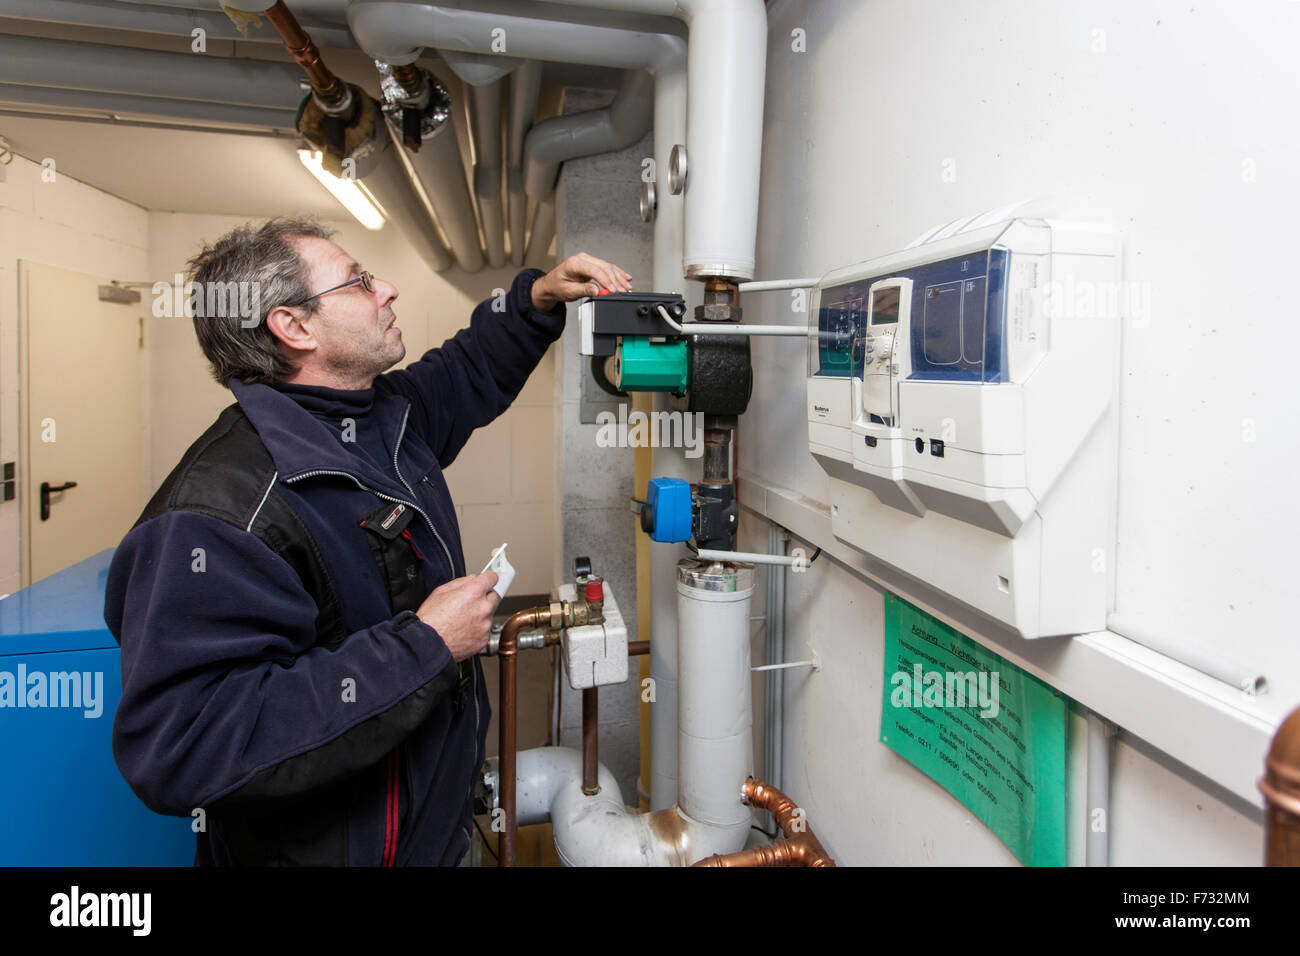 Caretaker checks the heating system in the boiler room Stock Photo